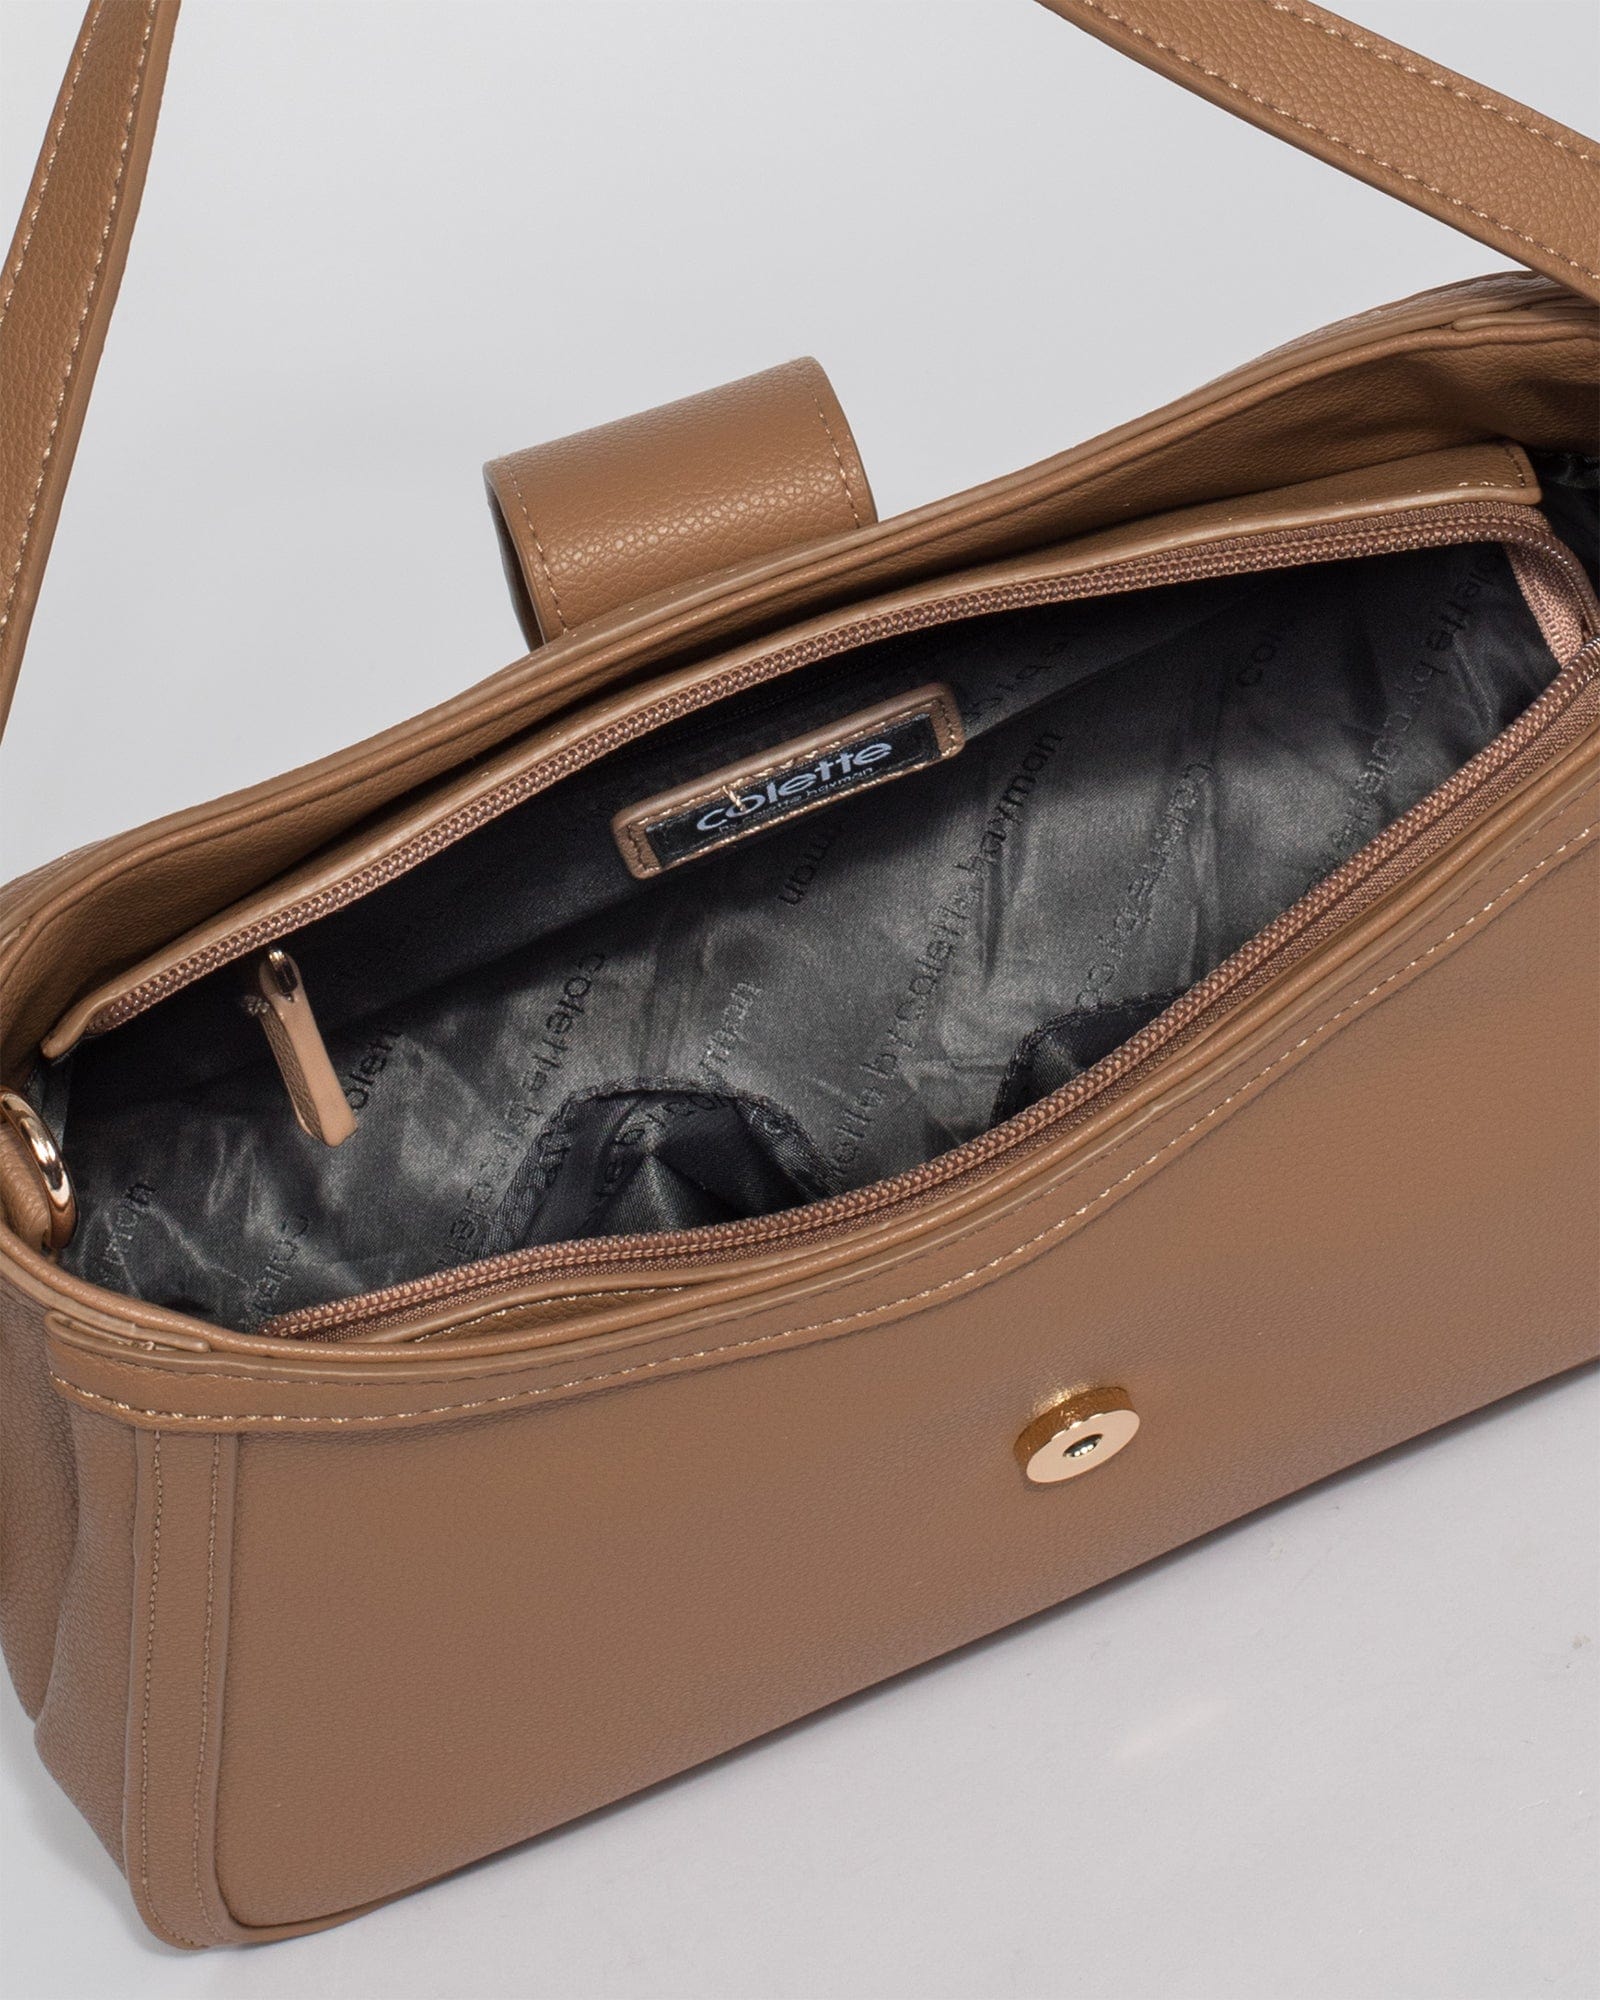 Bags for sale Mimco karl Colette | Bags | Gumtree Australia Banyule Area -  Heidelberg West | 1314026303